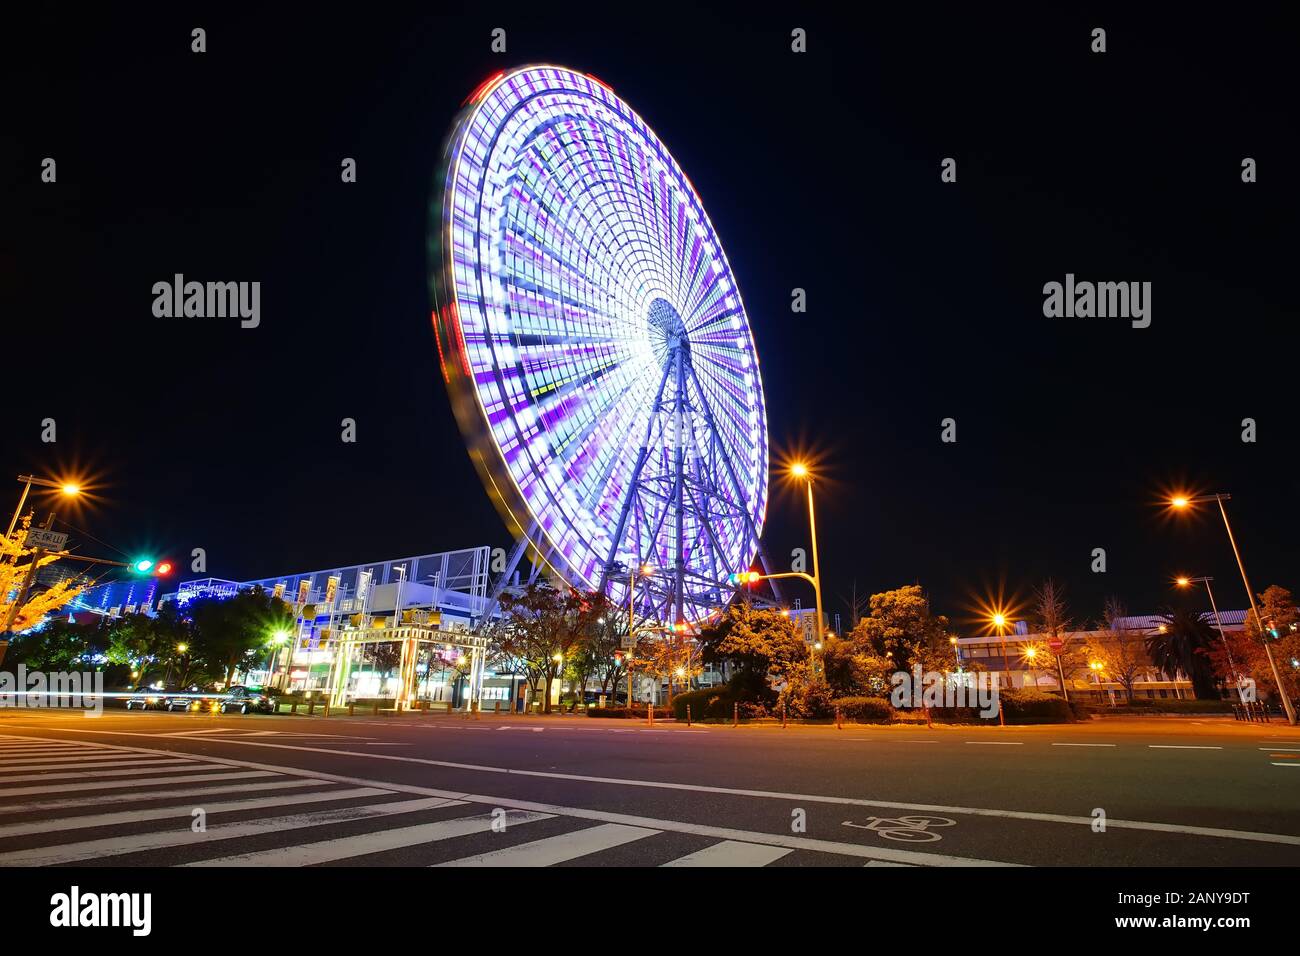 Le famose destinazioni di viaggio a Osaka Tempozan ruota panoramica Ferris, città di Osaka, in Giappone. Questa ruota è 112,5 metri di altezza (369 ft) e 100 metri di diamete Foto Stock